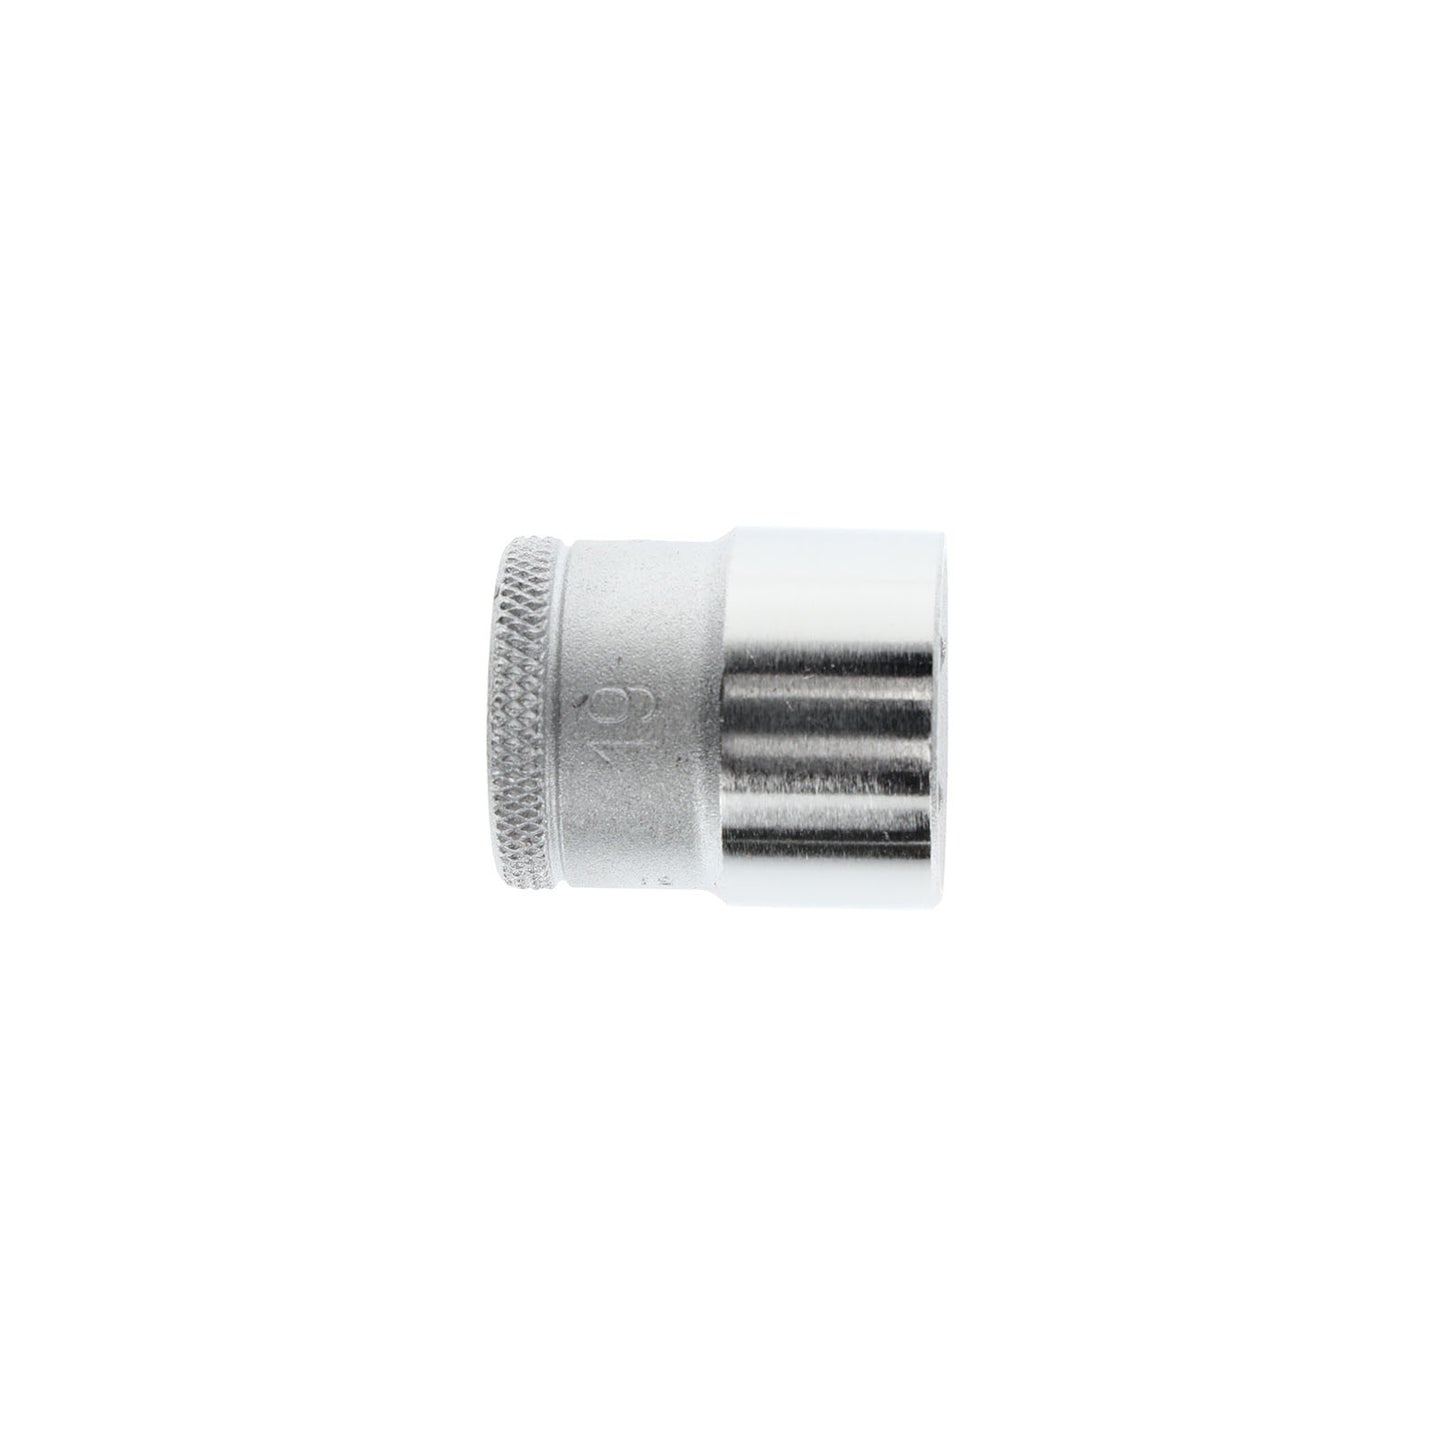 GEDORE 30 19 - Hexagonal Socket 3/8", 19 mm (6234740)